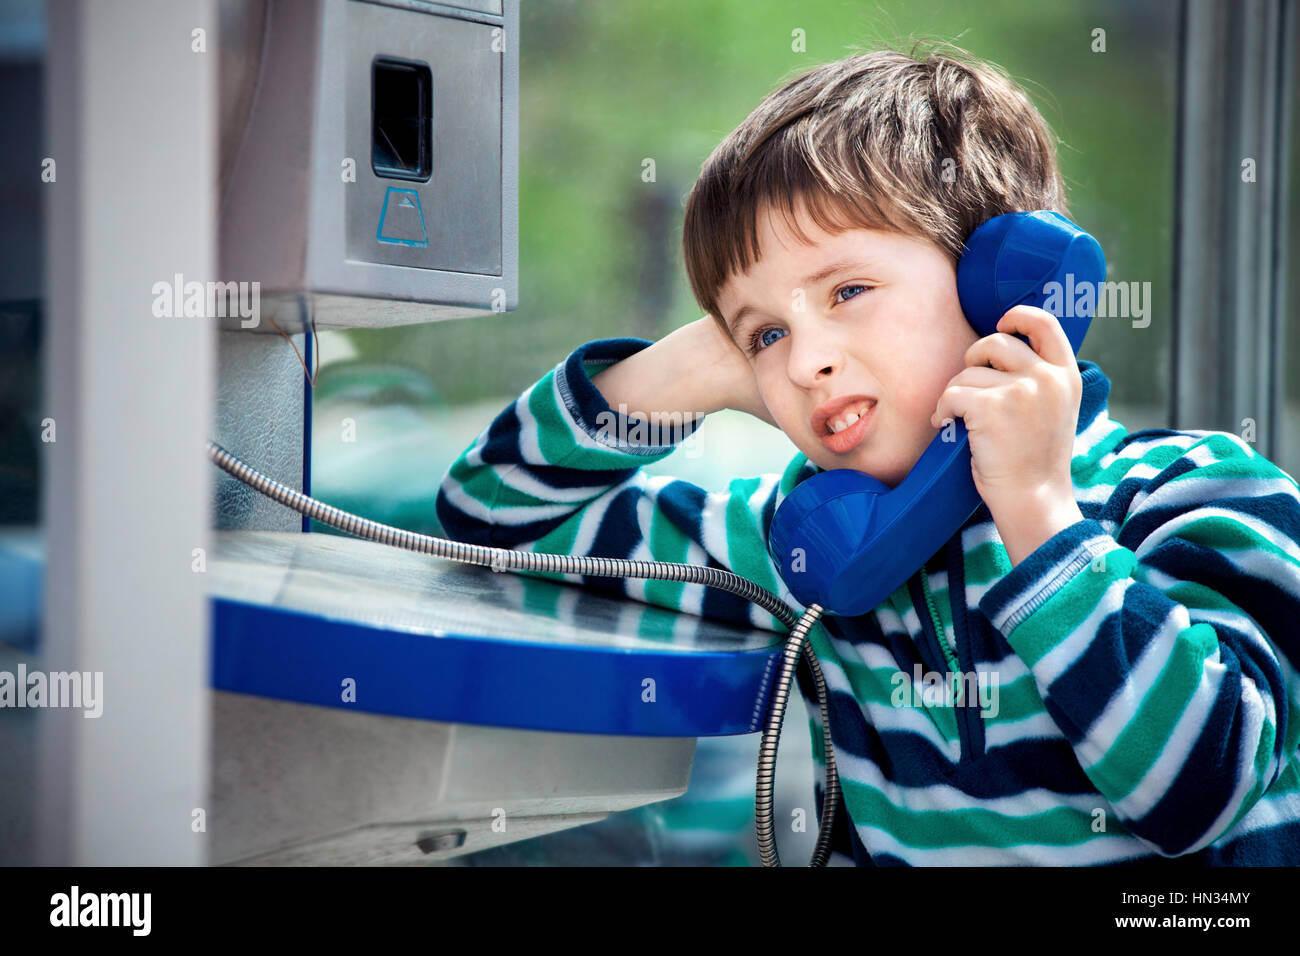 Включи телефон мальчик. Мальчик говорит по телефону. Мальчик звонит по телефону. Ребенок звонит. Ребенок в телефонной будке.